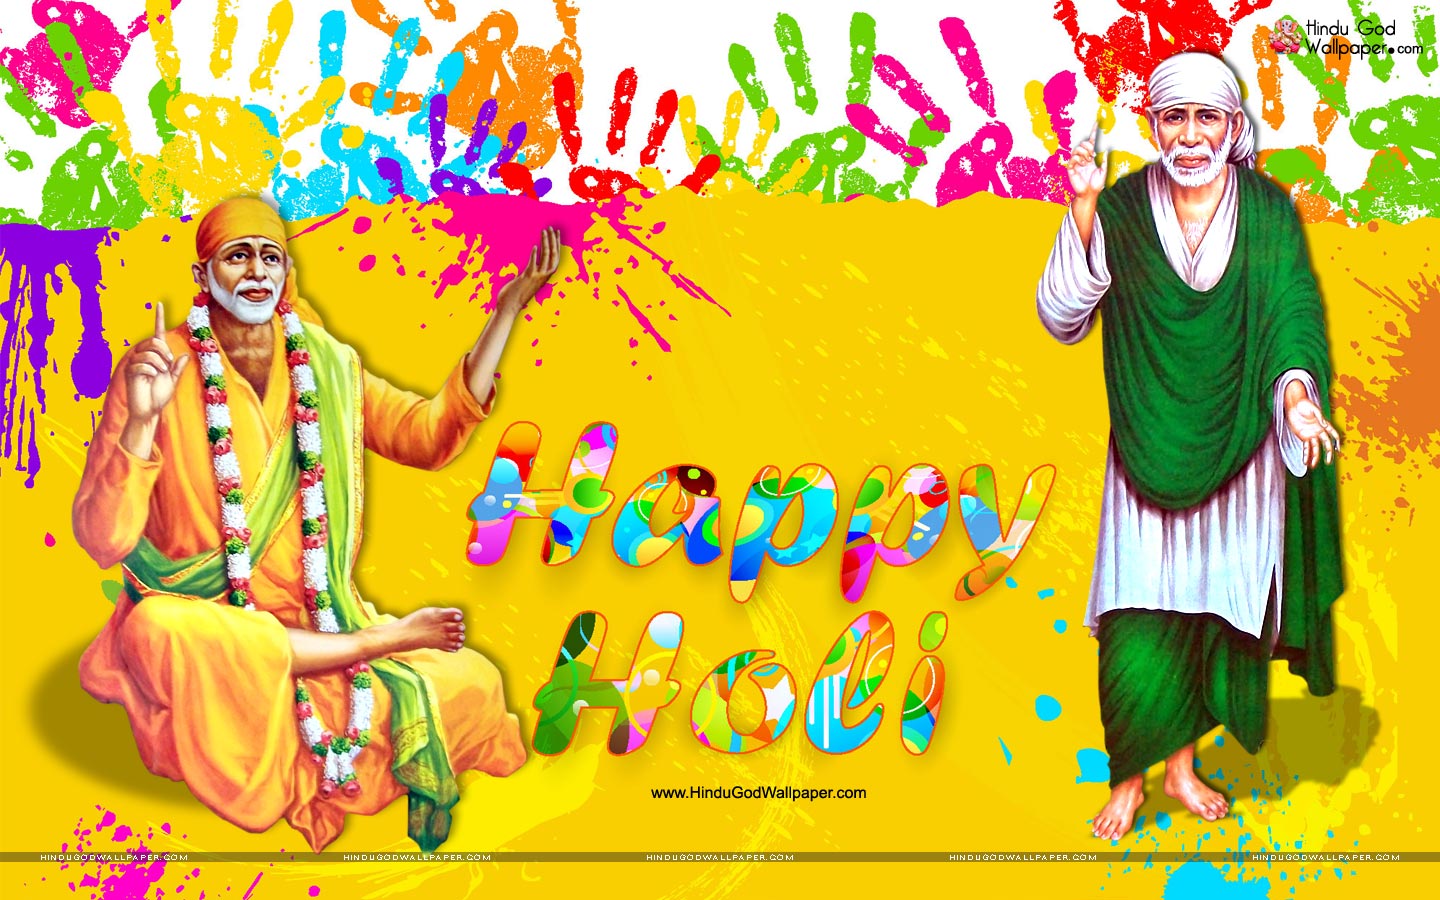 Shirdi Sai Baba Holi Wallpapers and Images Download